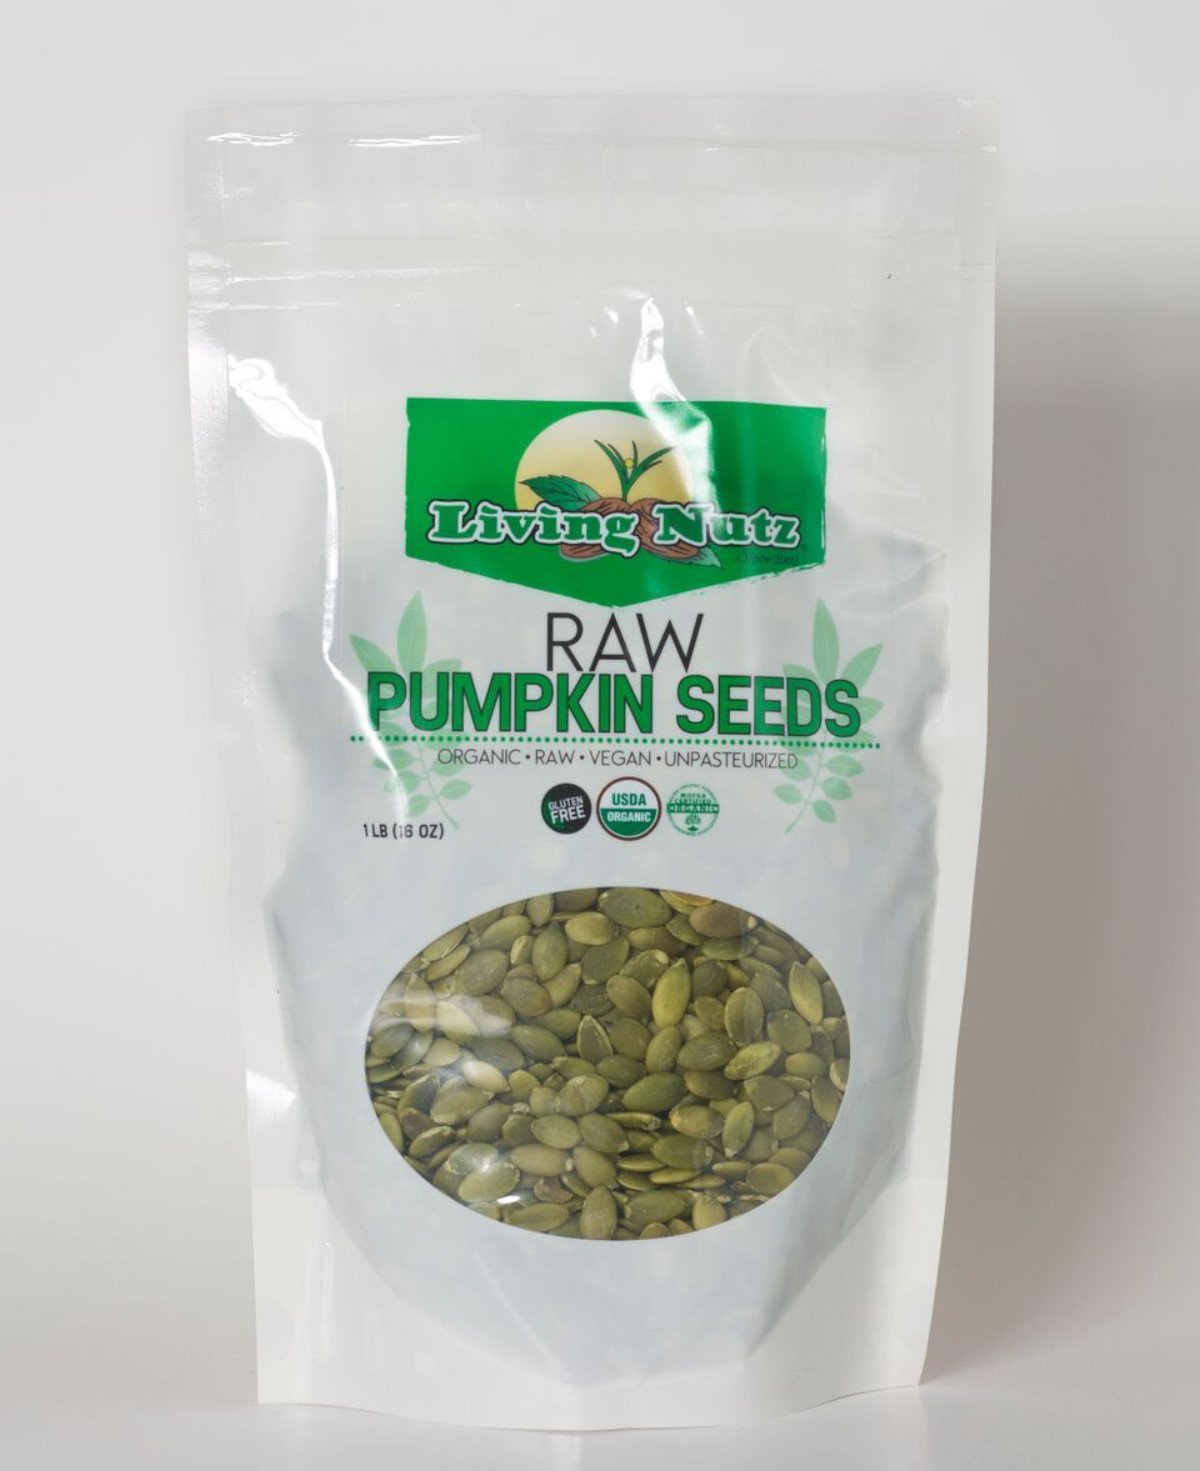 Raw organic pumpkin seeds for healthy benefits